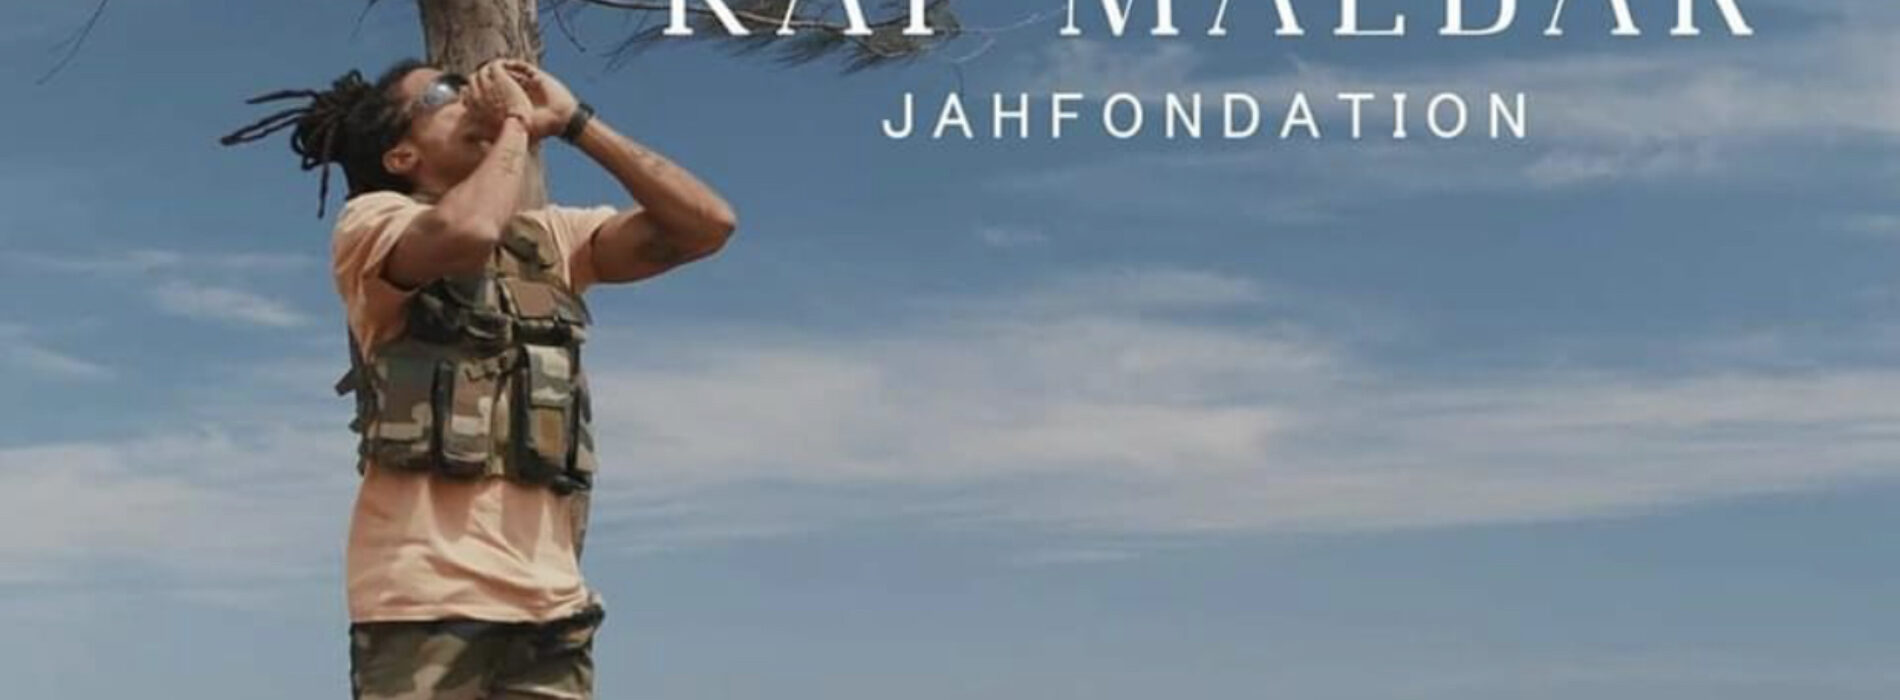 Kaf Malbar – JahFondation – King Kaf Malbar Réédition – (Clip Officiel) – Janvier 2023